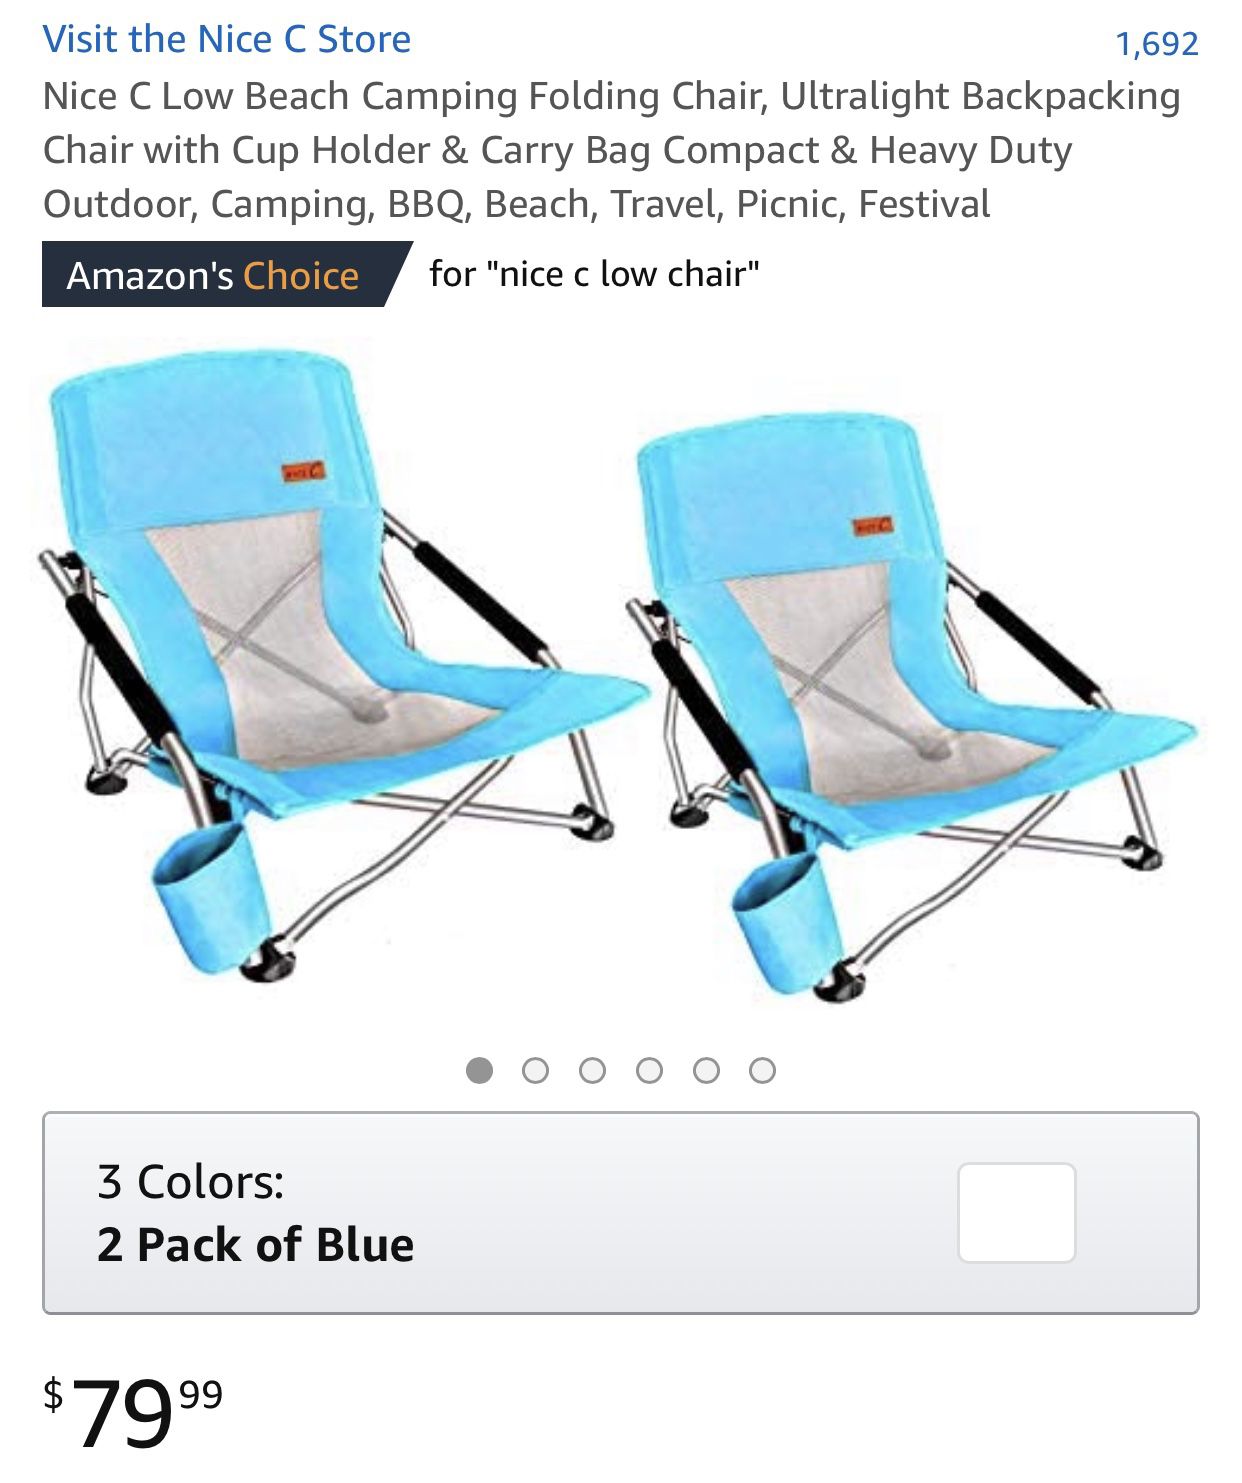 Nice C Low Beach Camping Folding Chair (pair brand new)